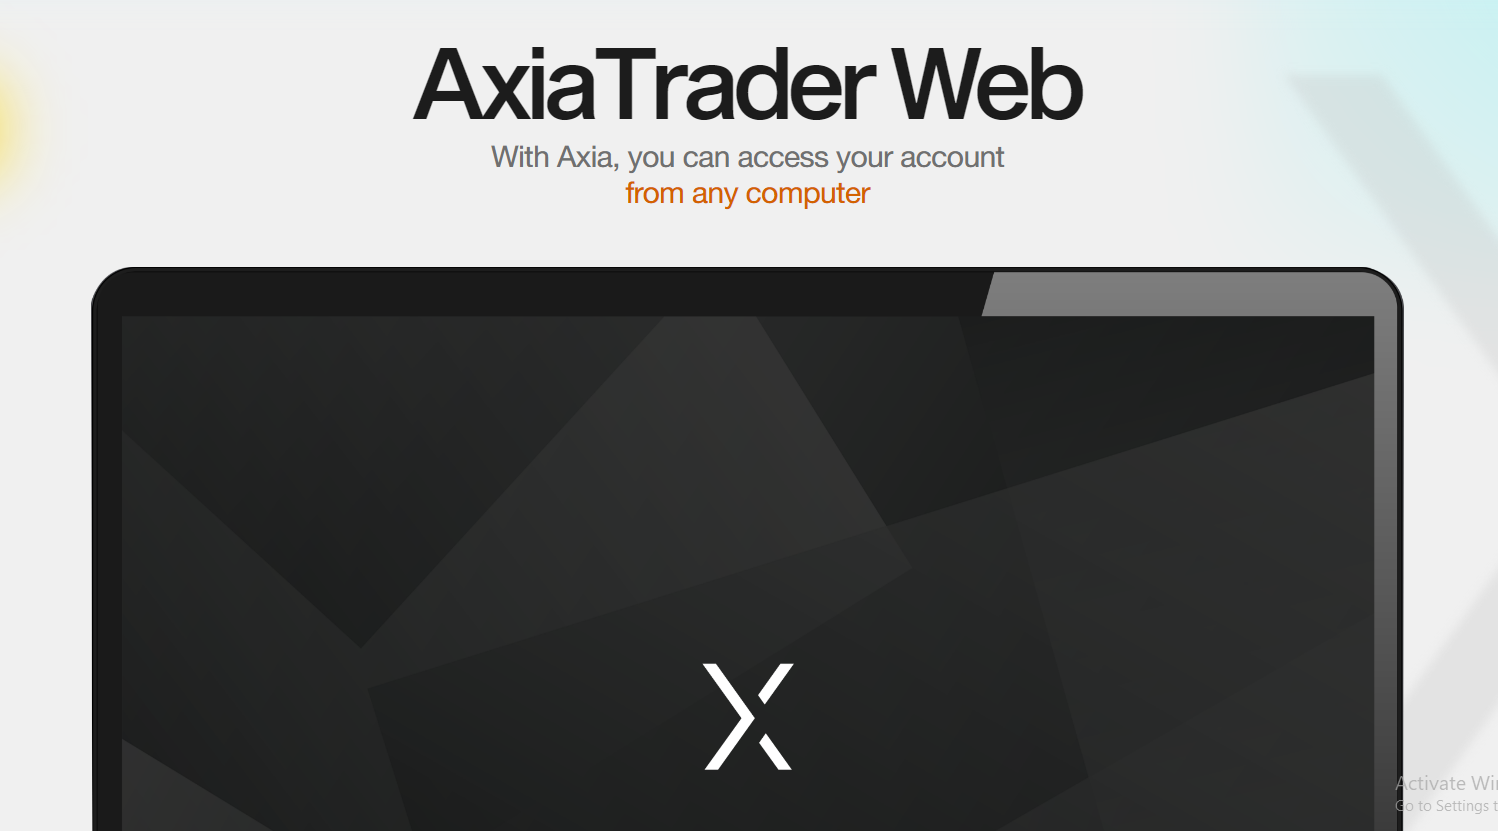 Axia Trade offers a proprietary trading platform